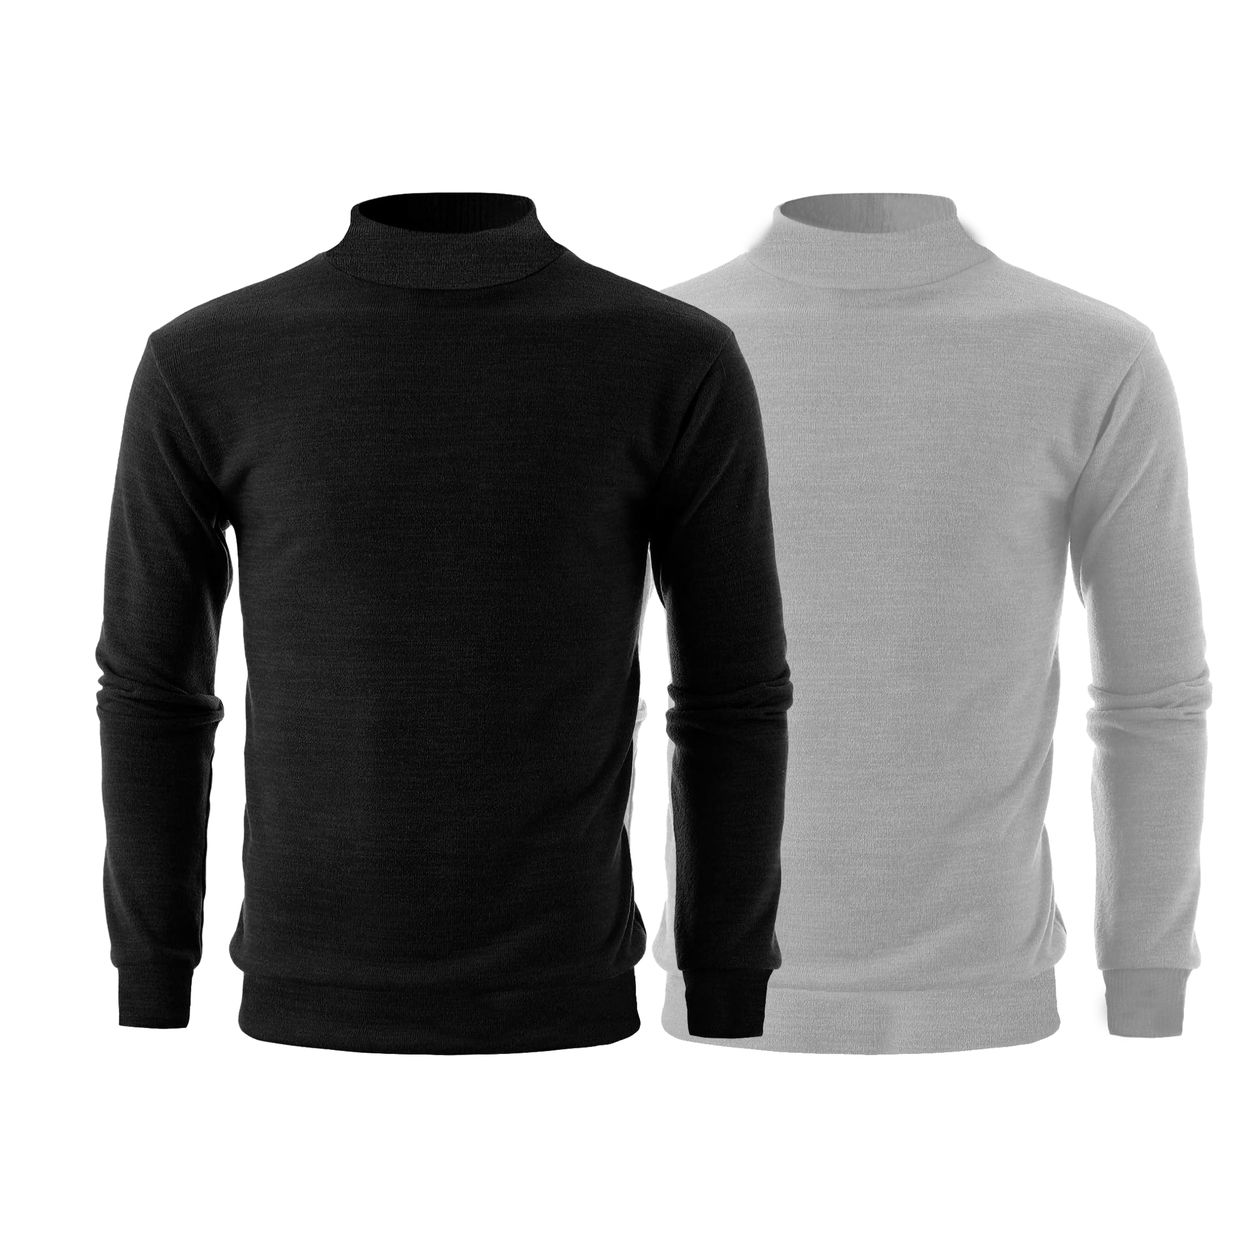 2-Pack: Men's Winter Warm Cozy Knit Slim Fit Mock Neck Sweater - White & Burgundy, X-large